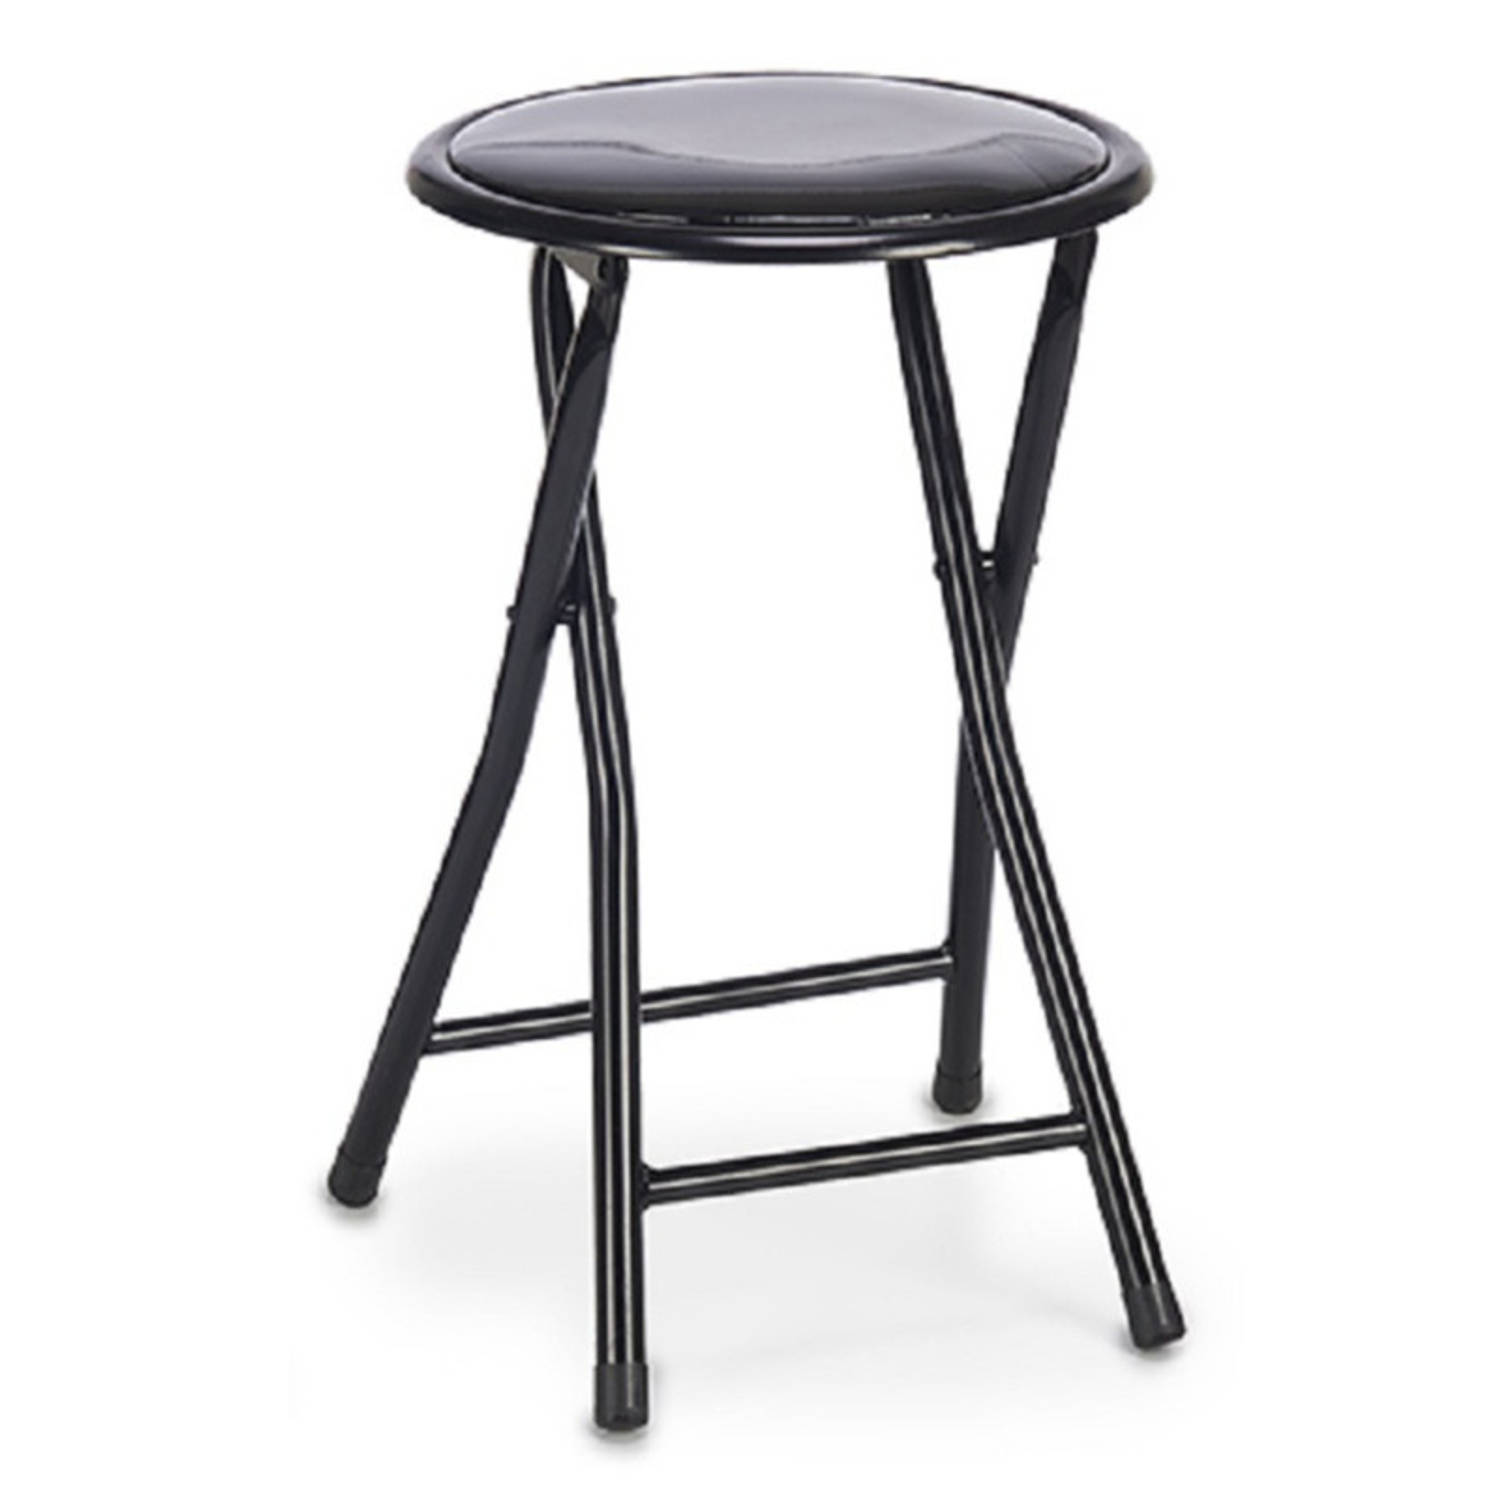 Giftdecor Bijzet krukje/stoel - Opvouwbaar - zwart - metaal/pvc - D30 x H45 cm